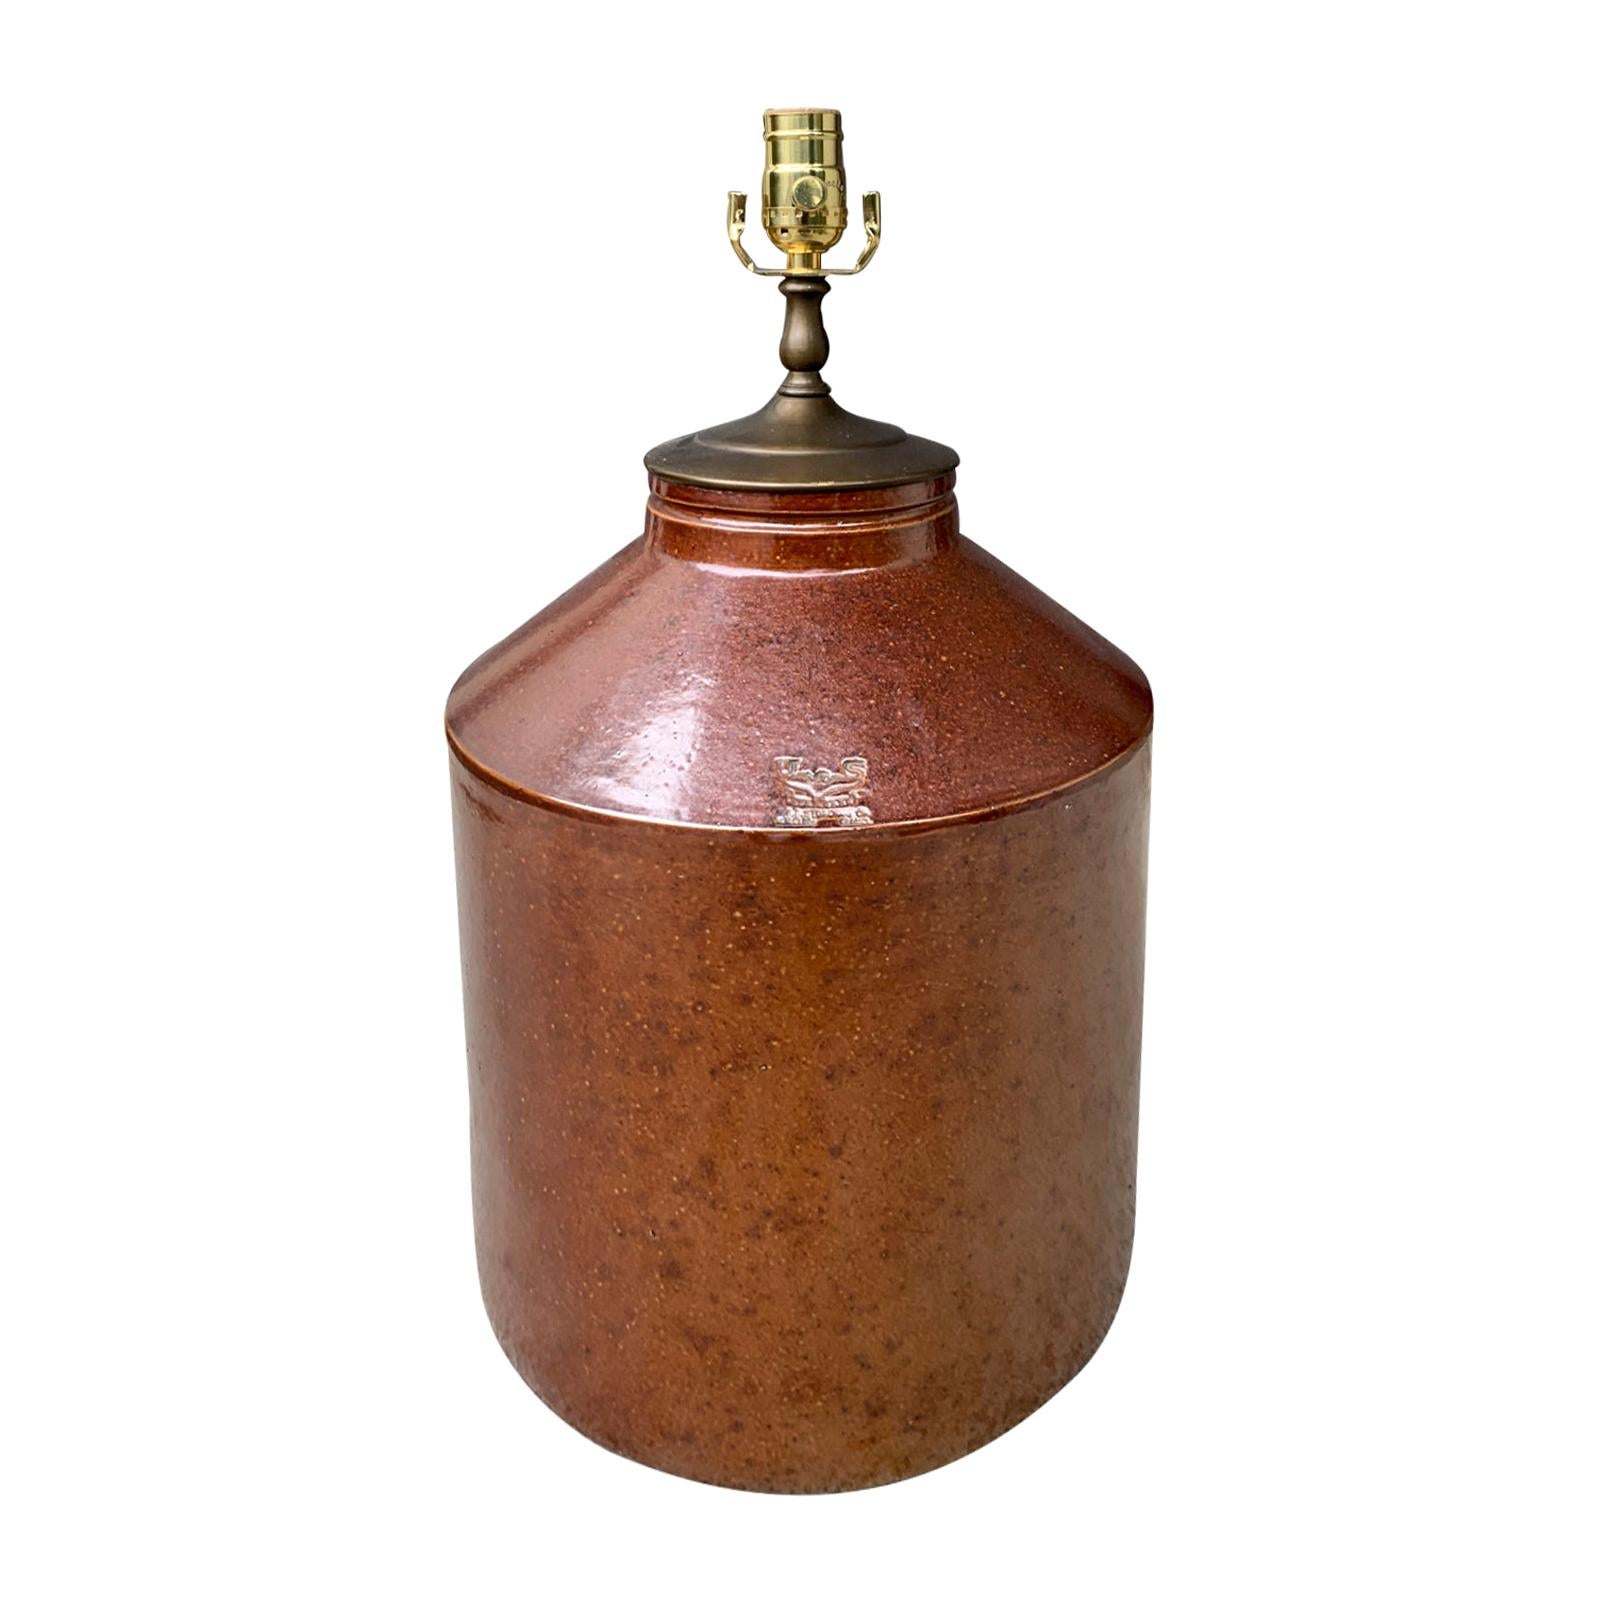 19th Century American Stoneware Crock as Lamp, Marked U.S. Standard Stoneware Co